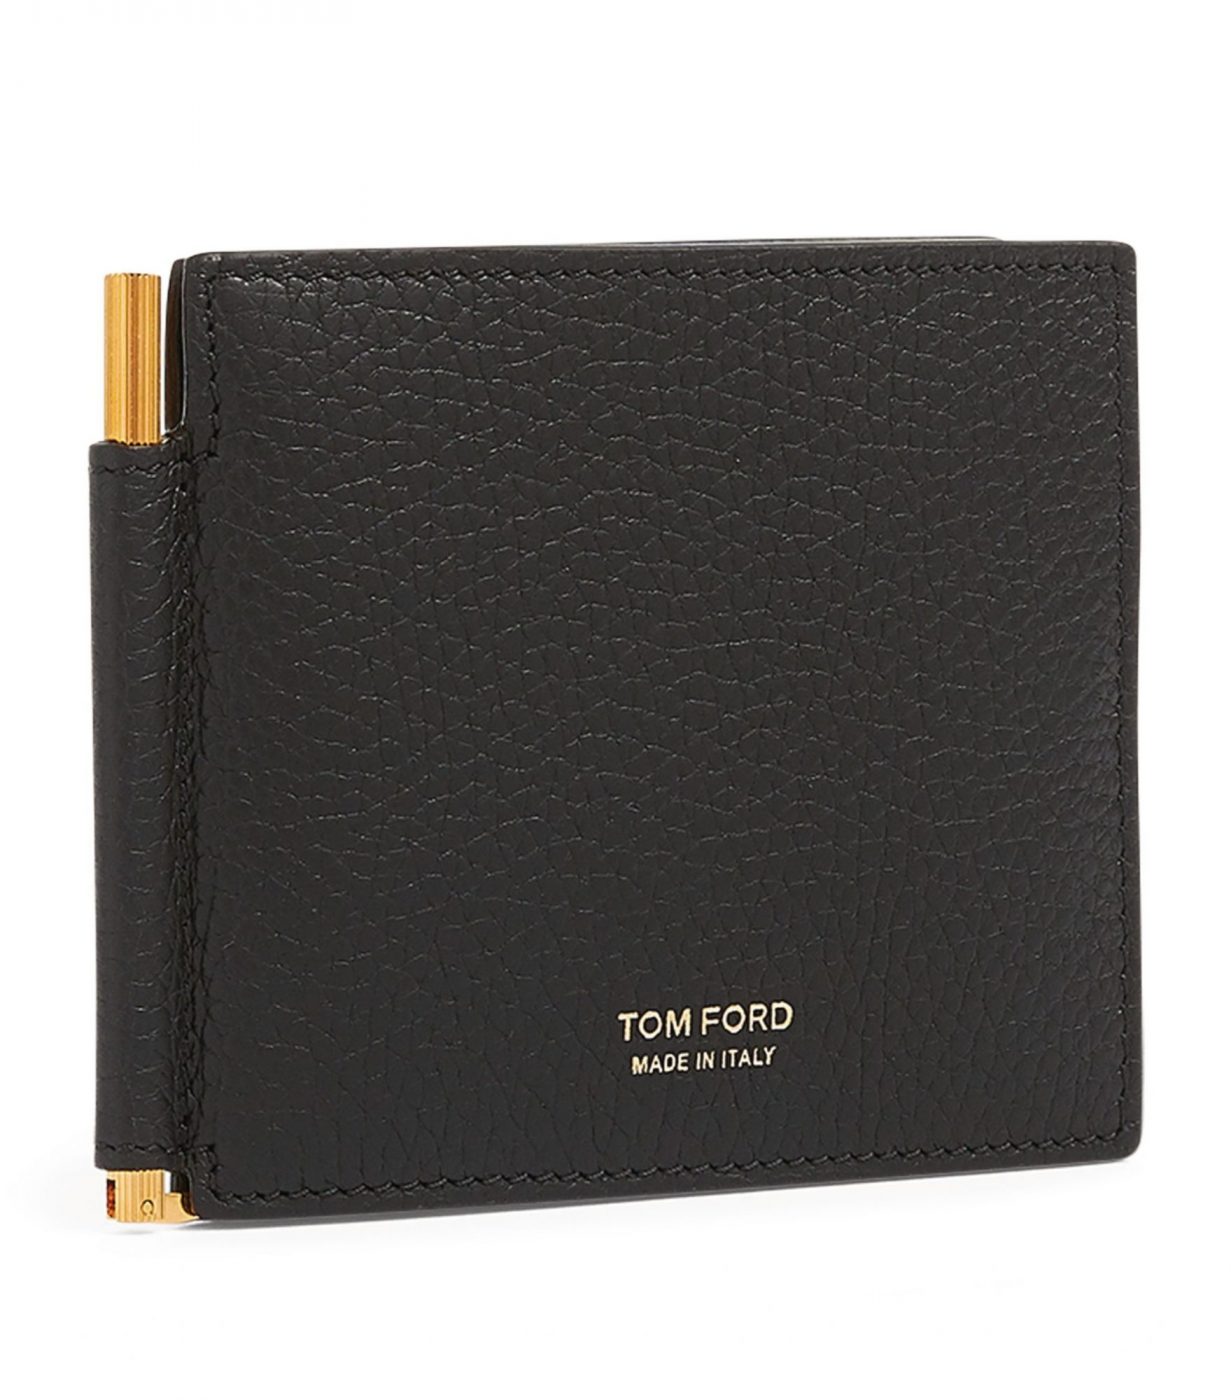 Tom Ford wallet best luxury money clip black